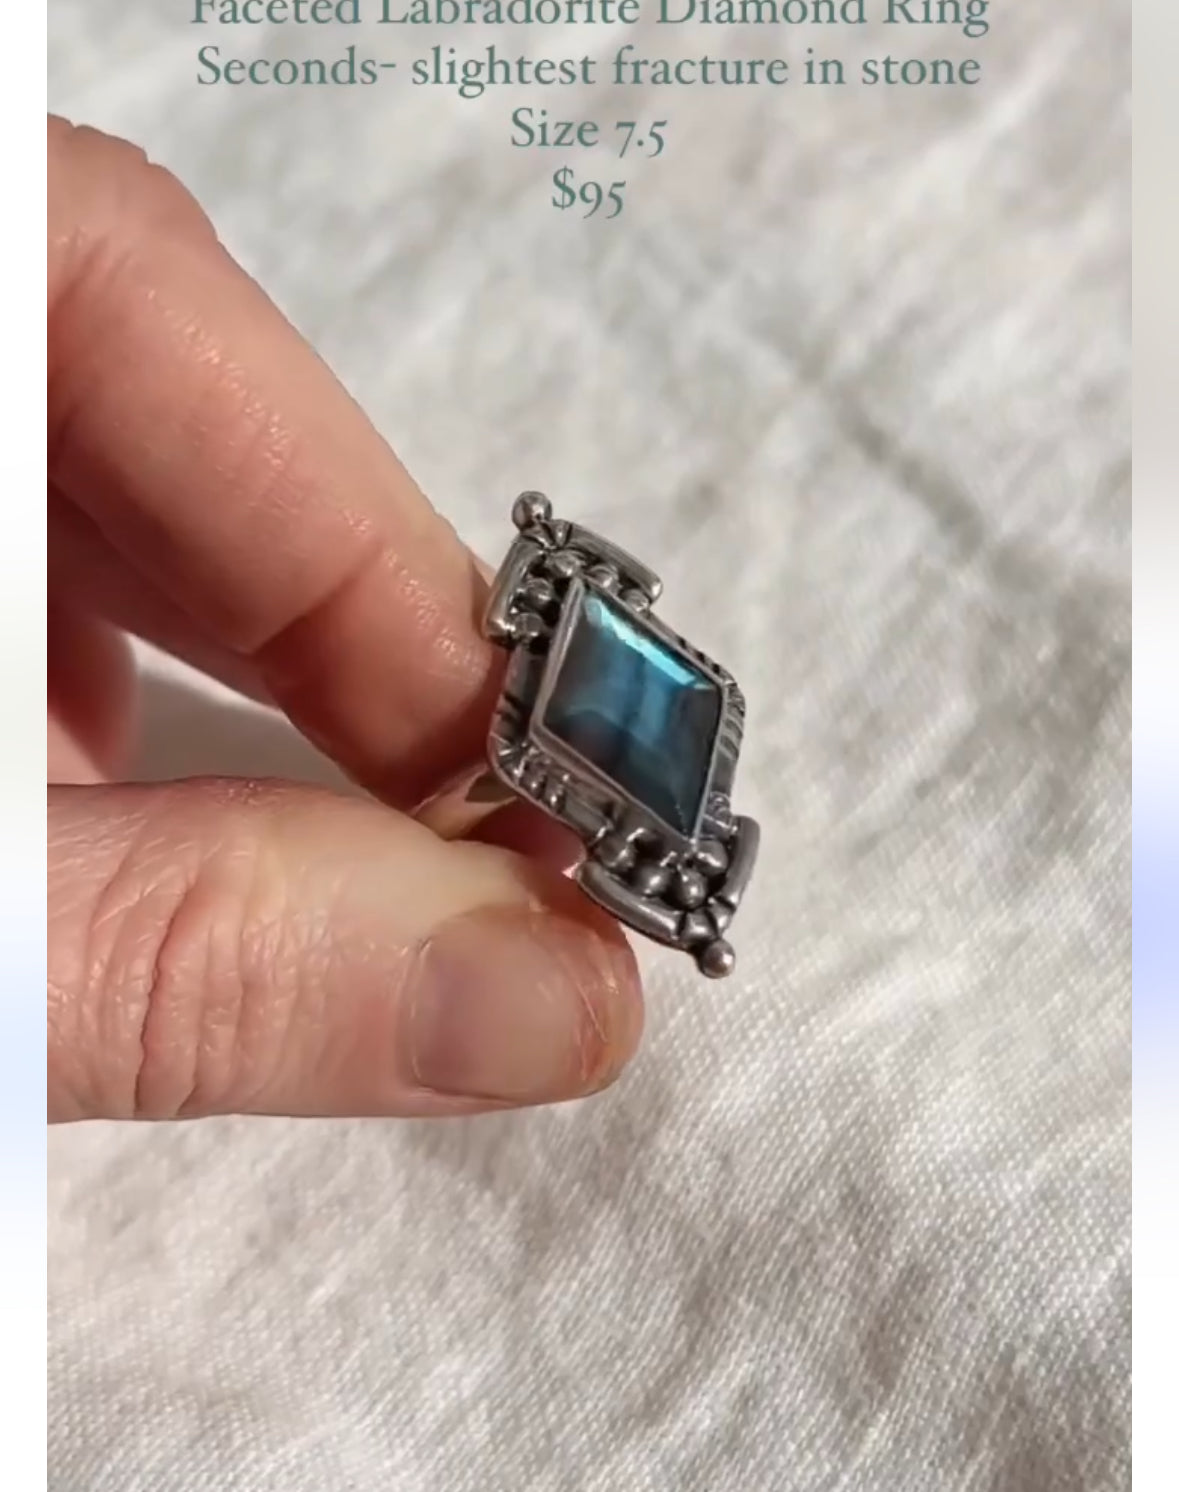 Labradorite Diamond Ring size 7.5